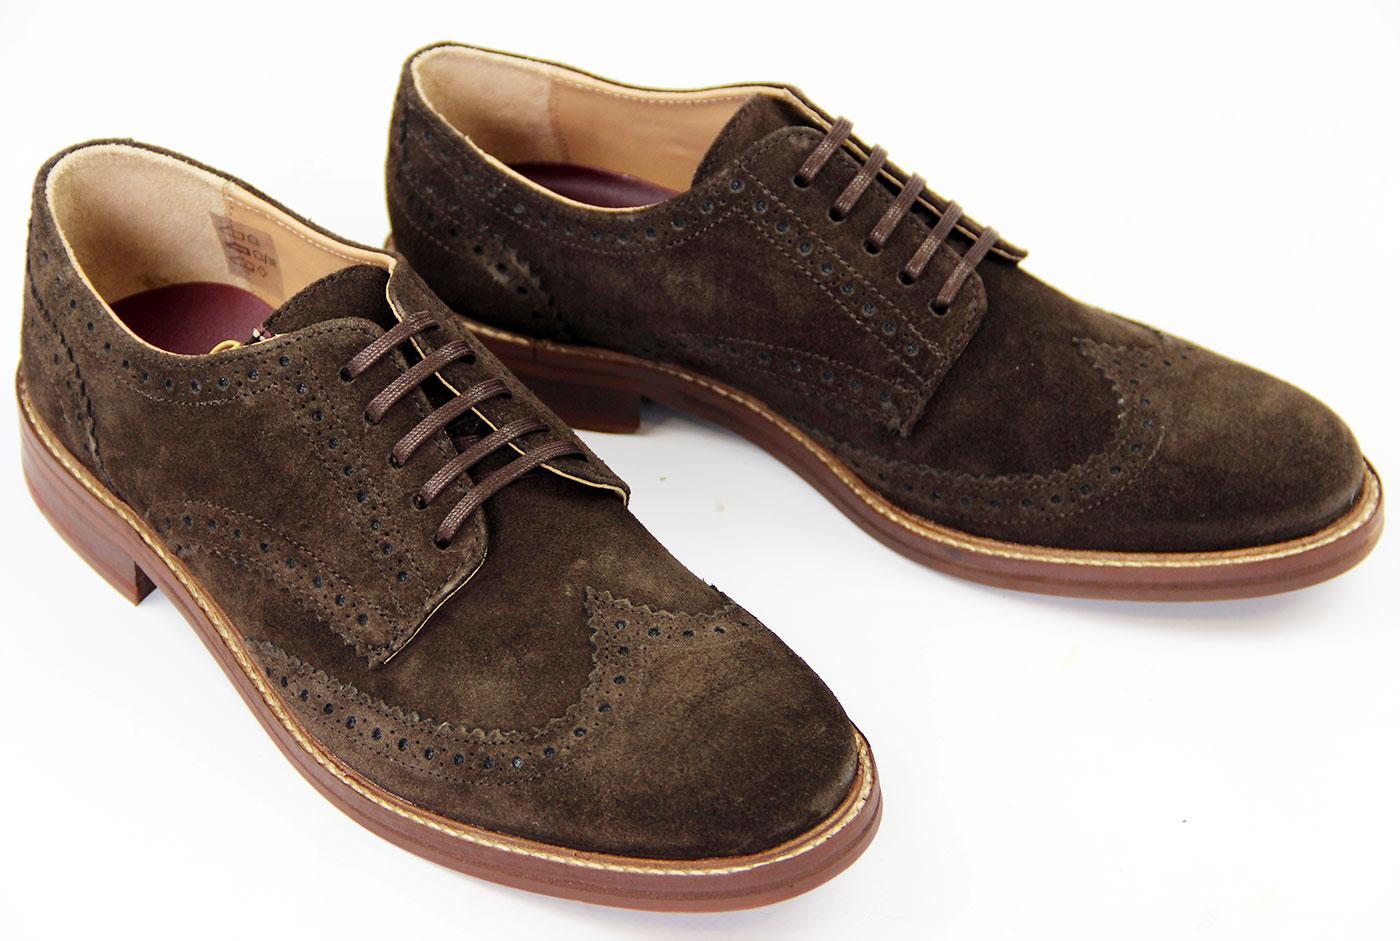 MERC Aldwych Retro 60s Mod Suede Brogues Shoes in Dark Brown